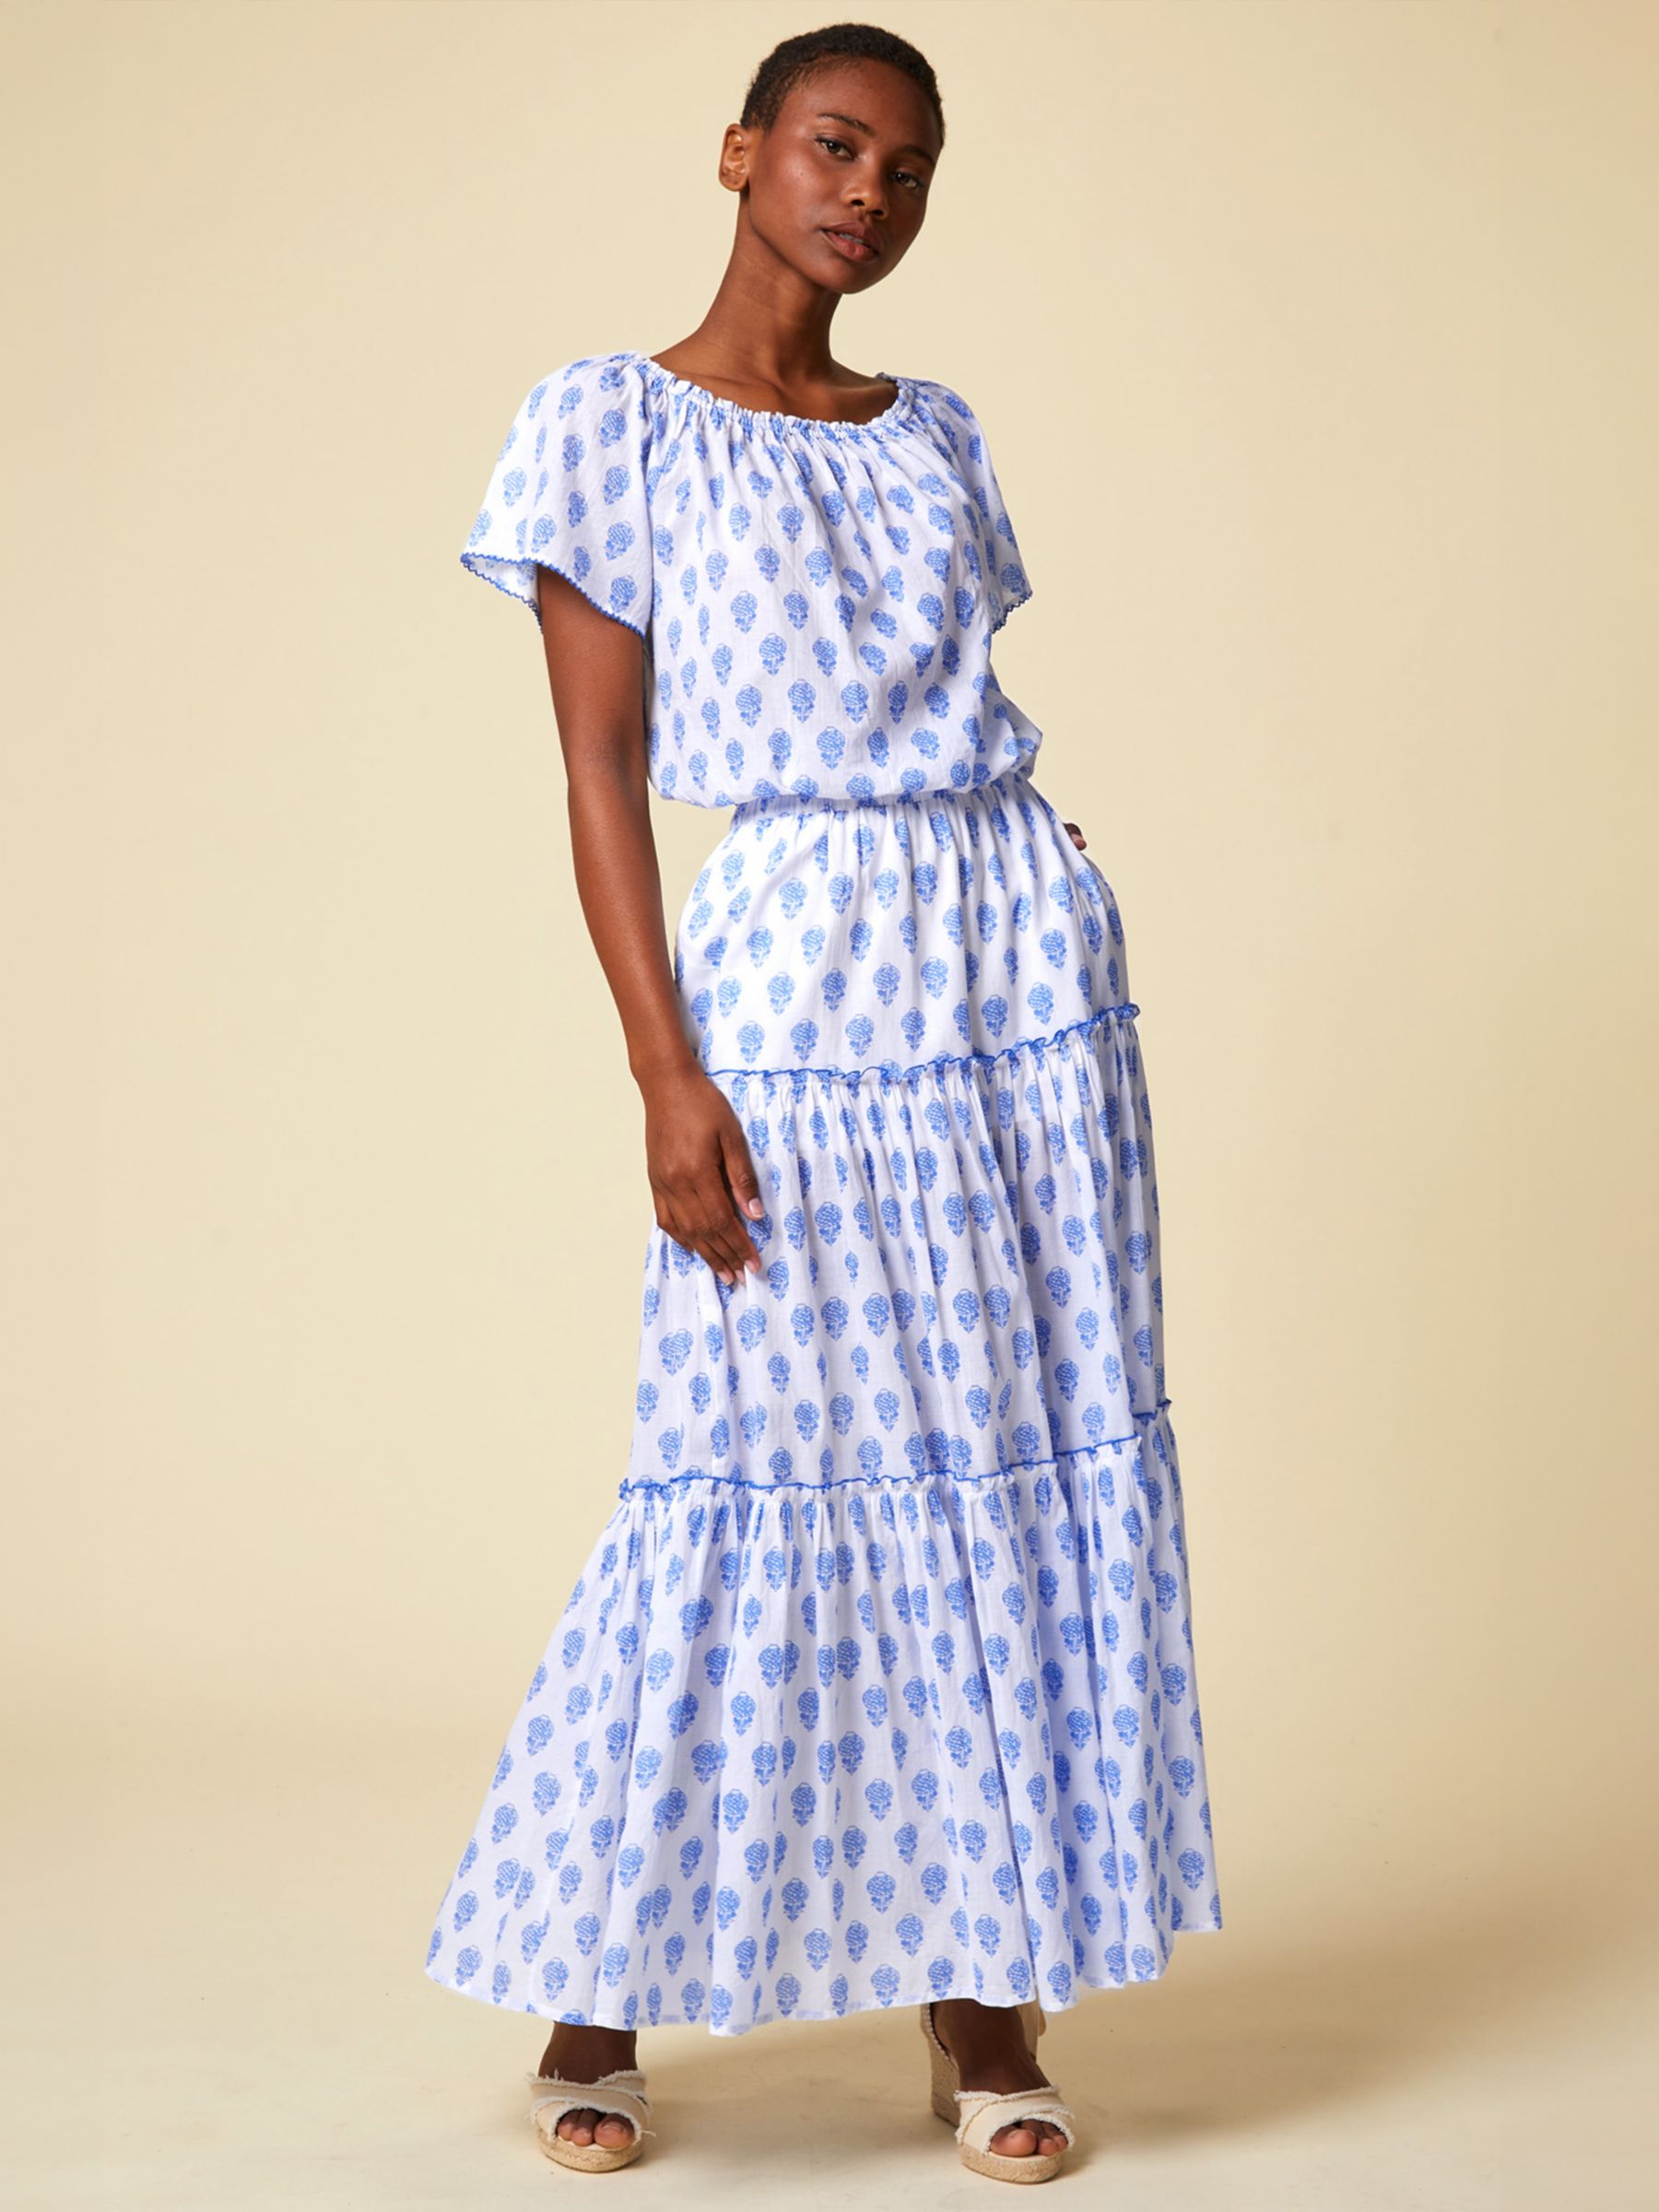 Buy Aspiga Petite Bea Maxi Skirt, Pineapple White/Blue Online at johnlewis.com